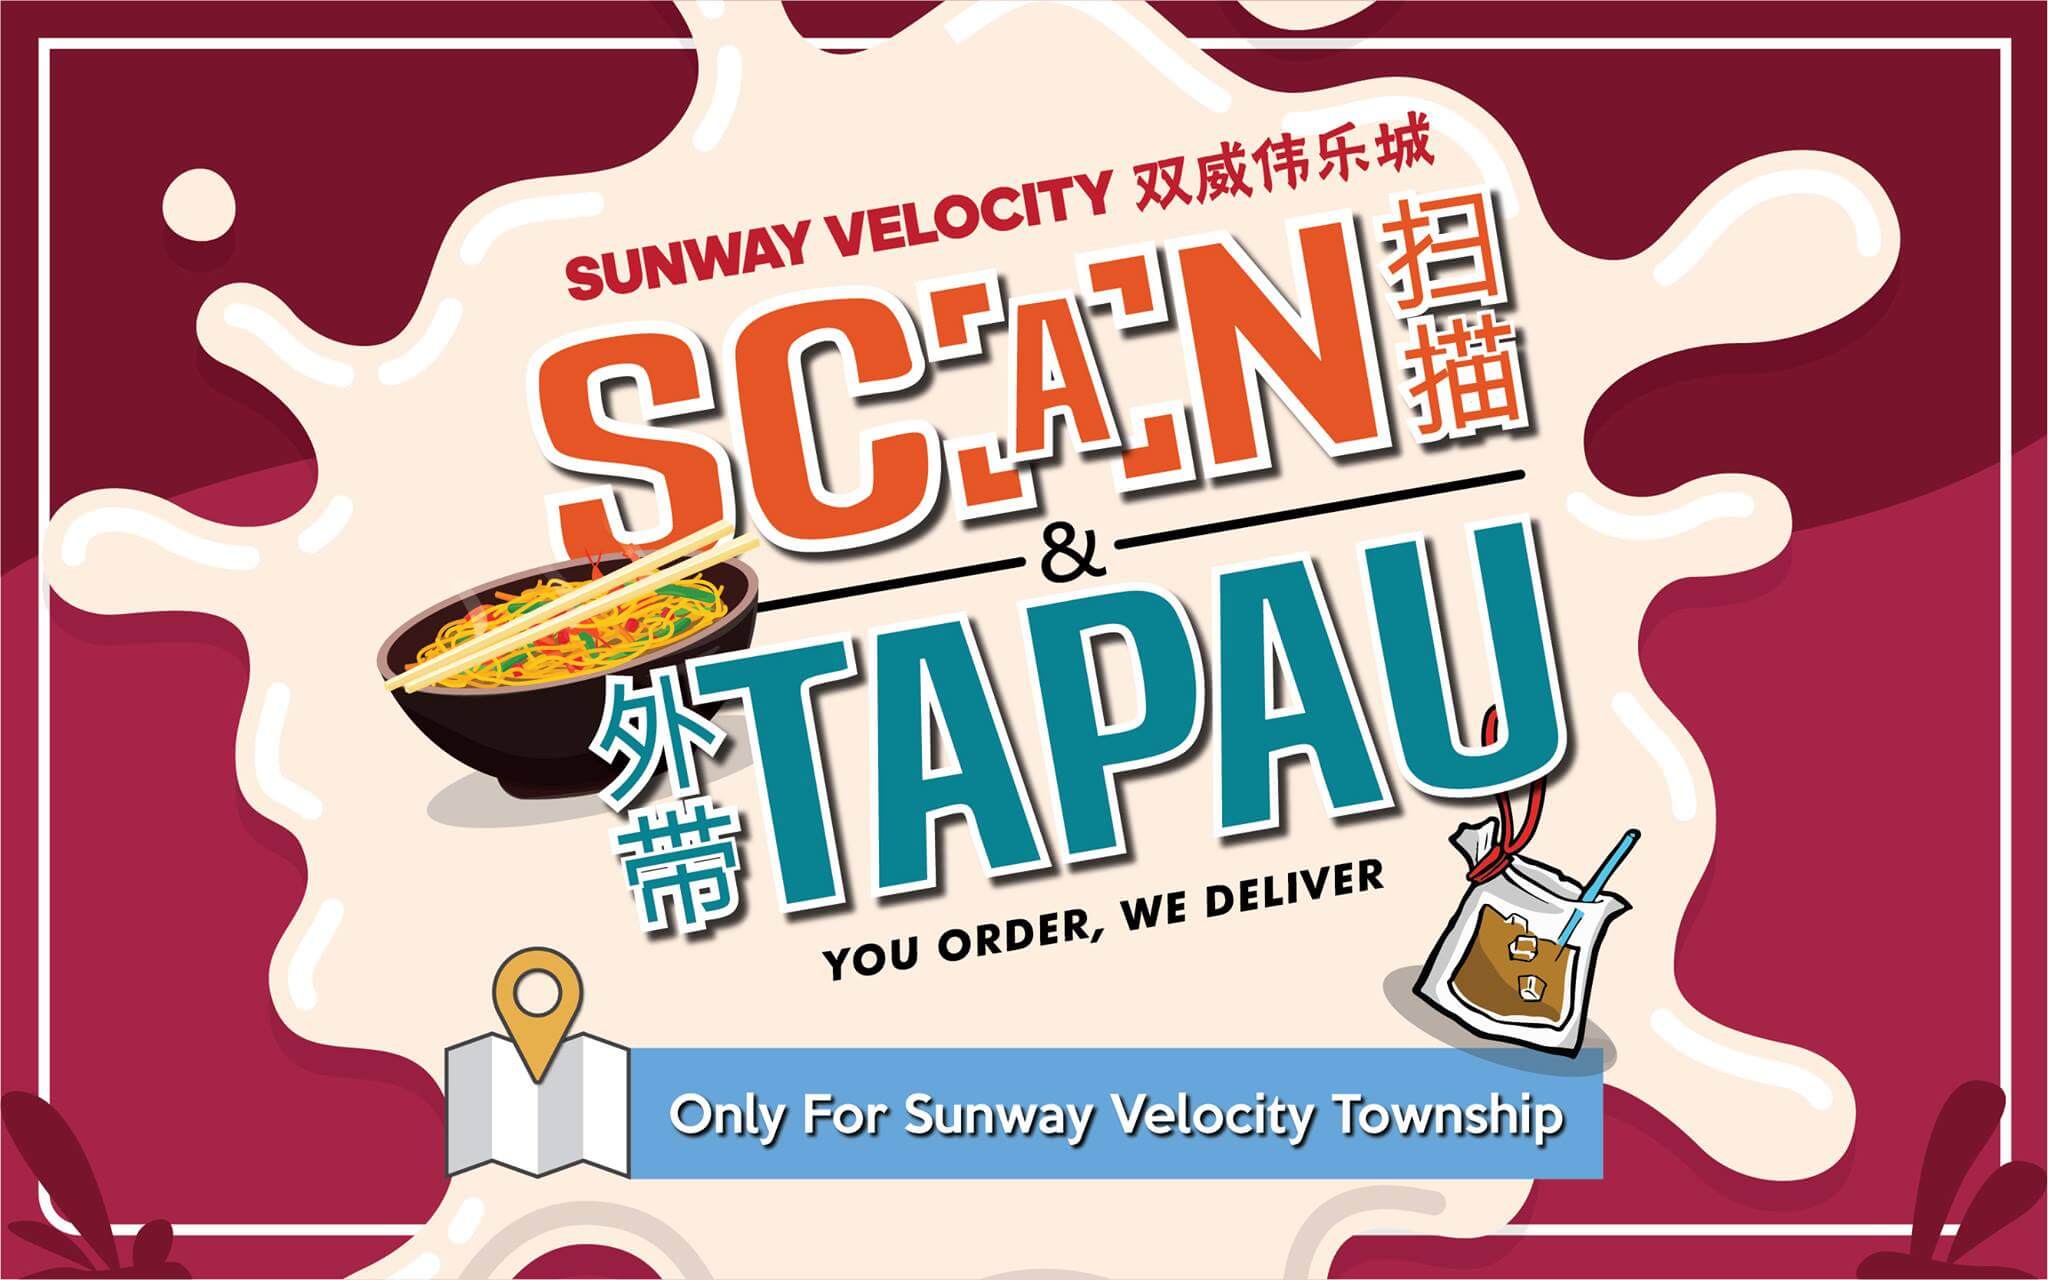 scan & tapau Fest Sunway Velocity